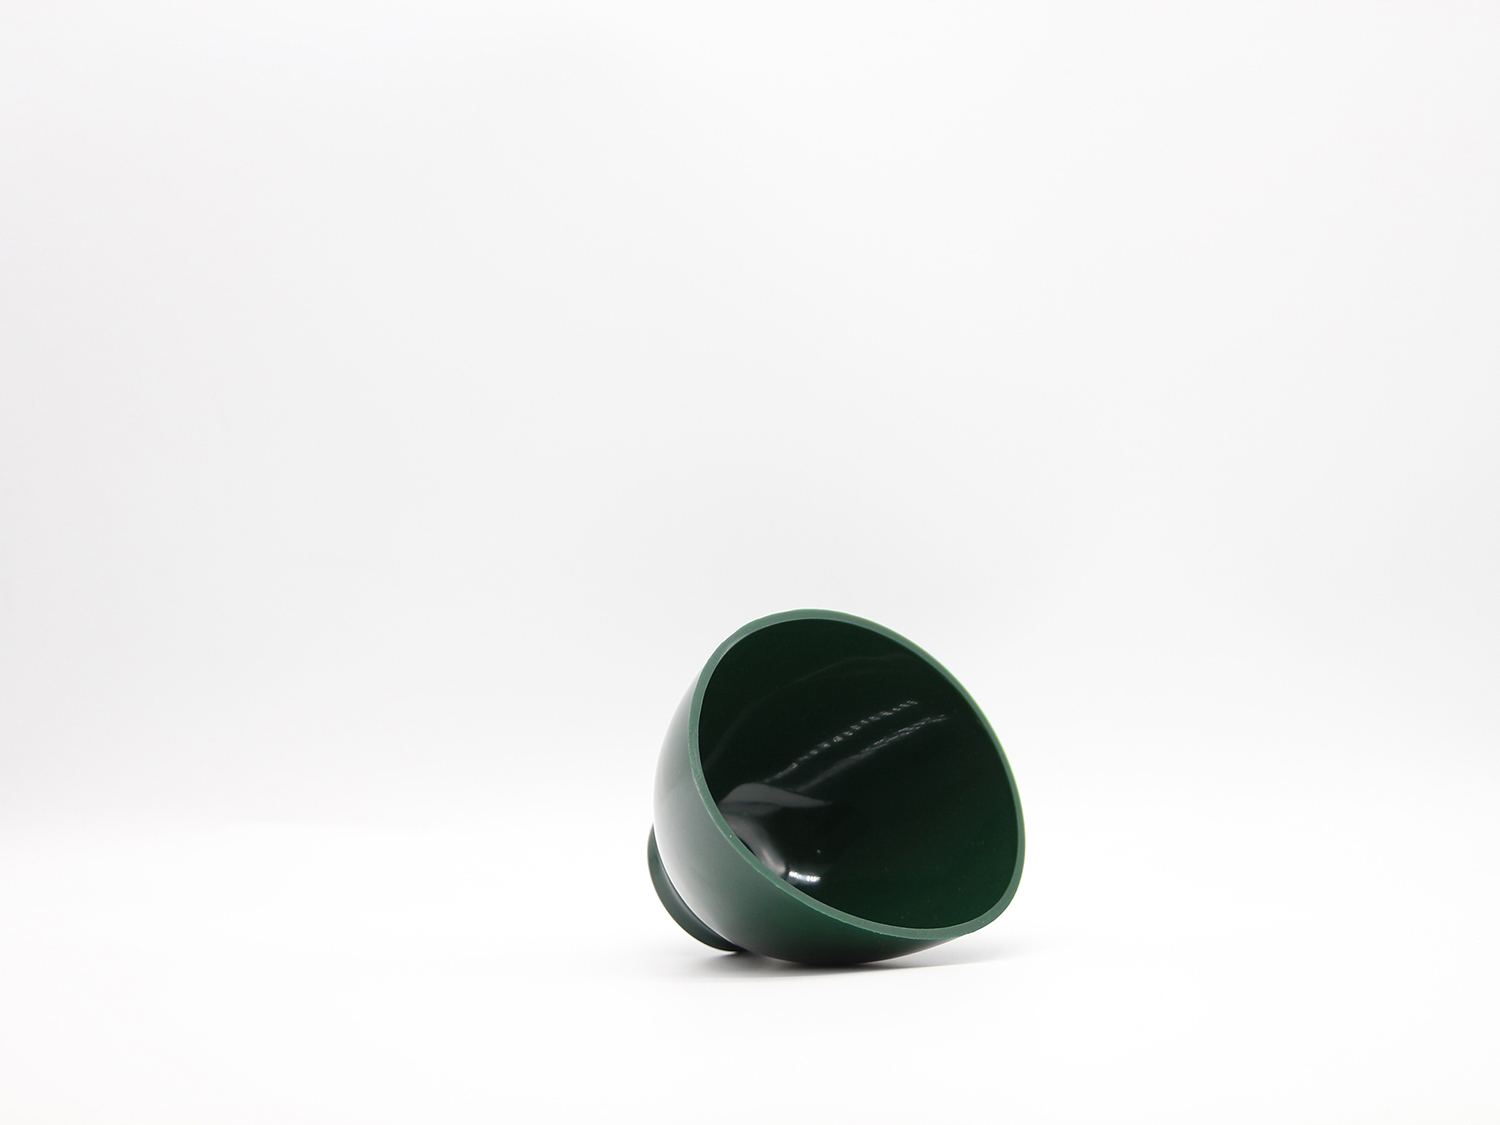 Henry Schein Flexible Green Mixing Bowls